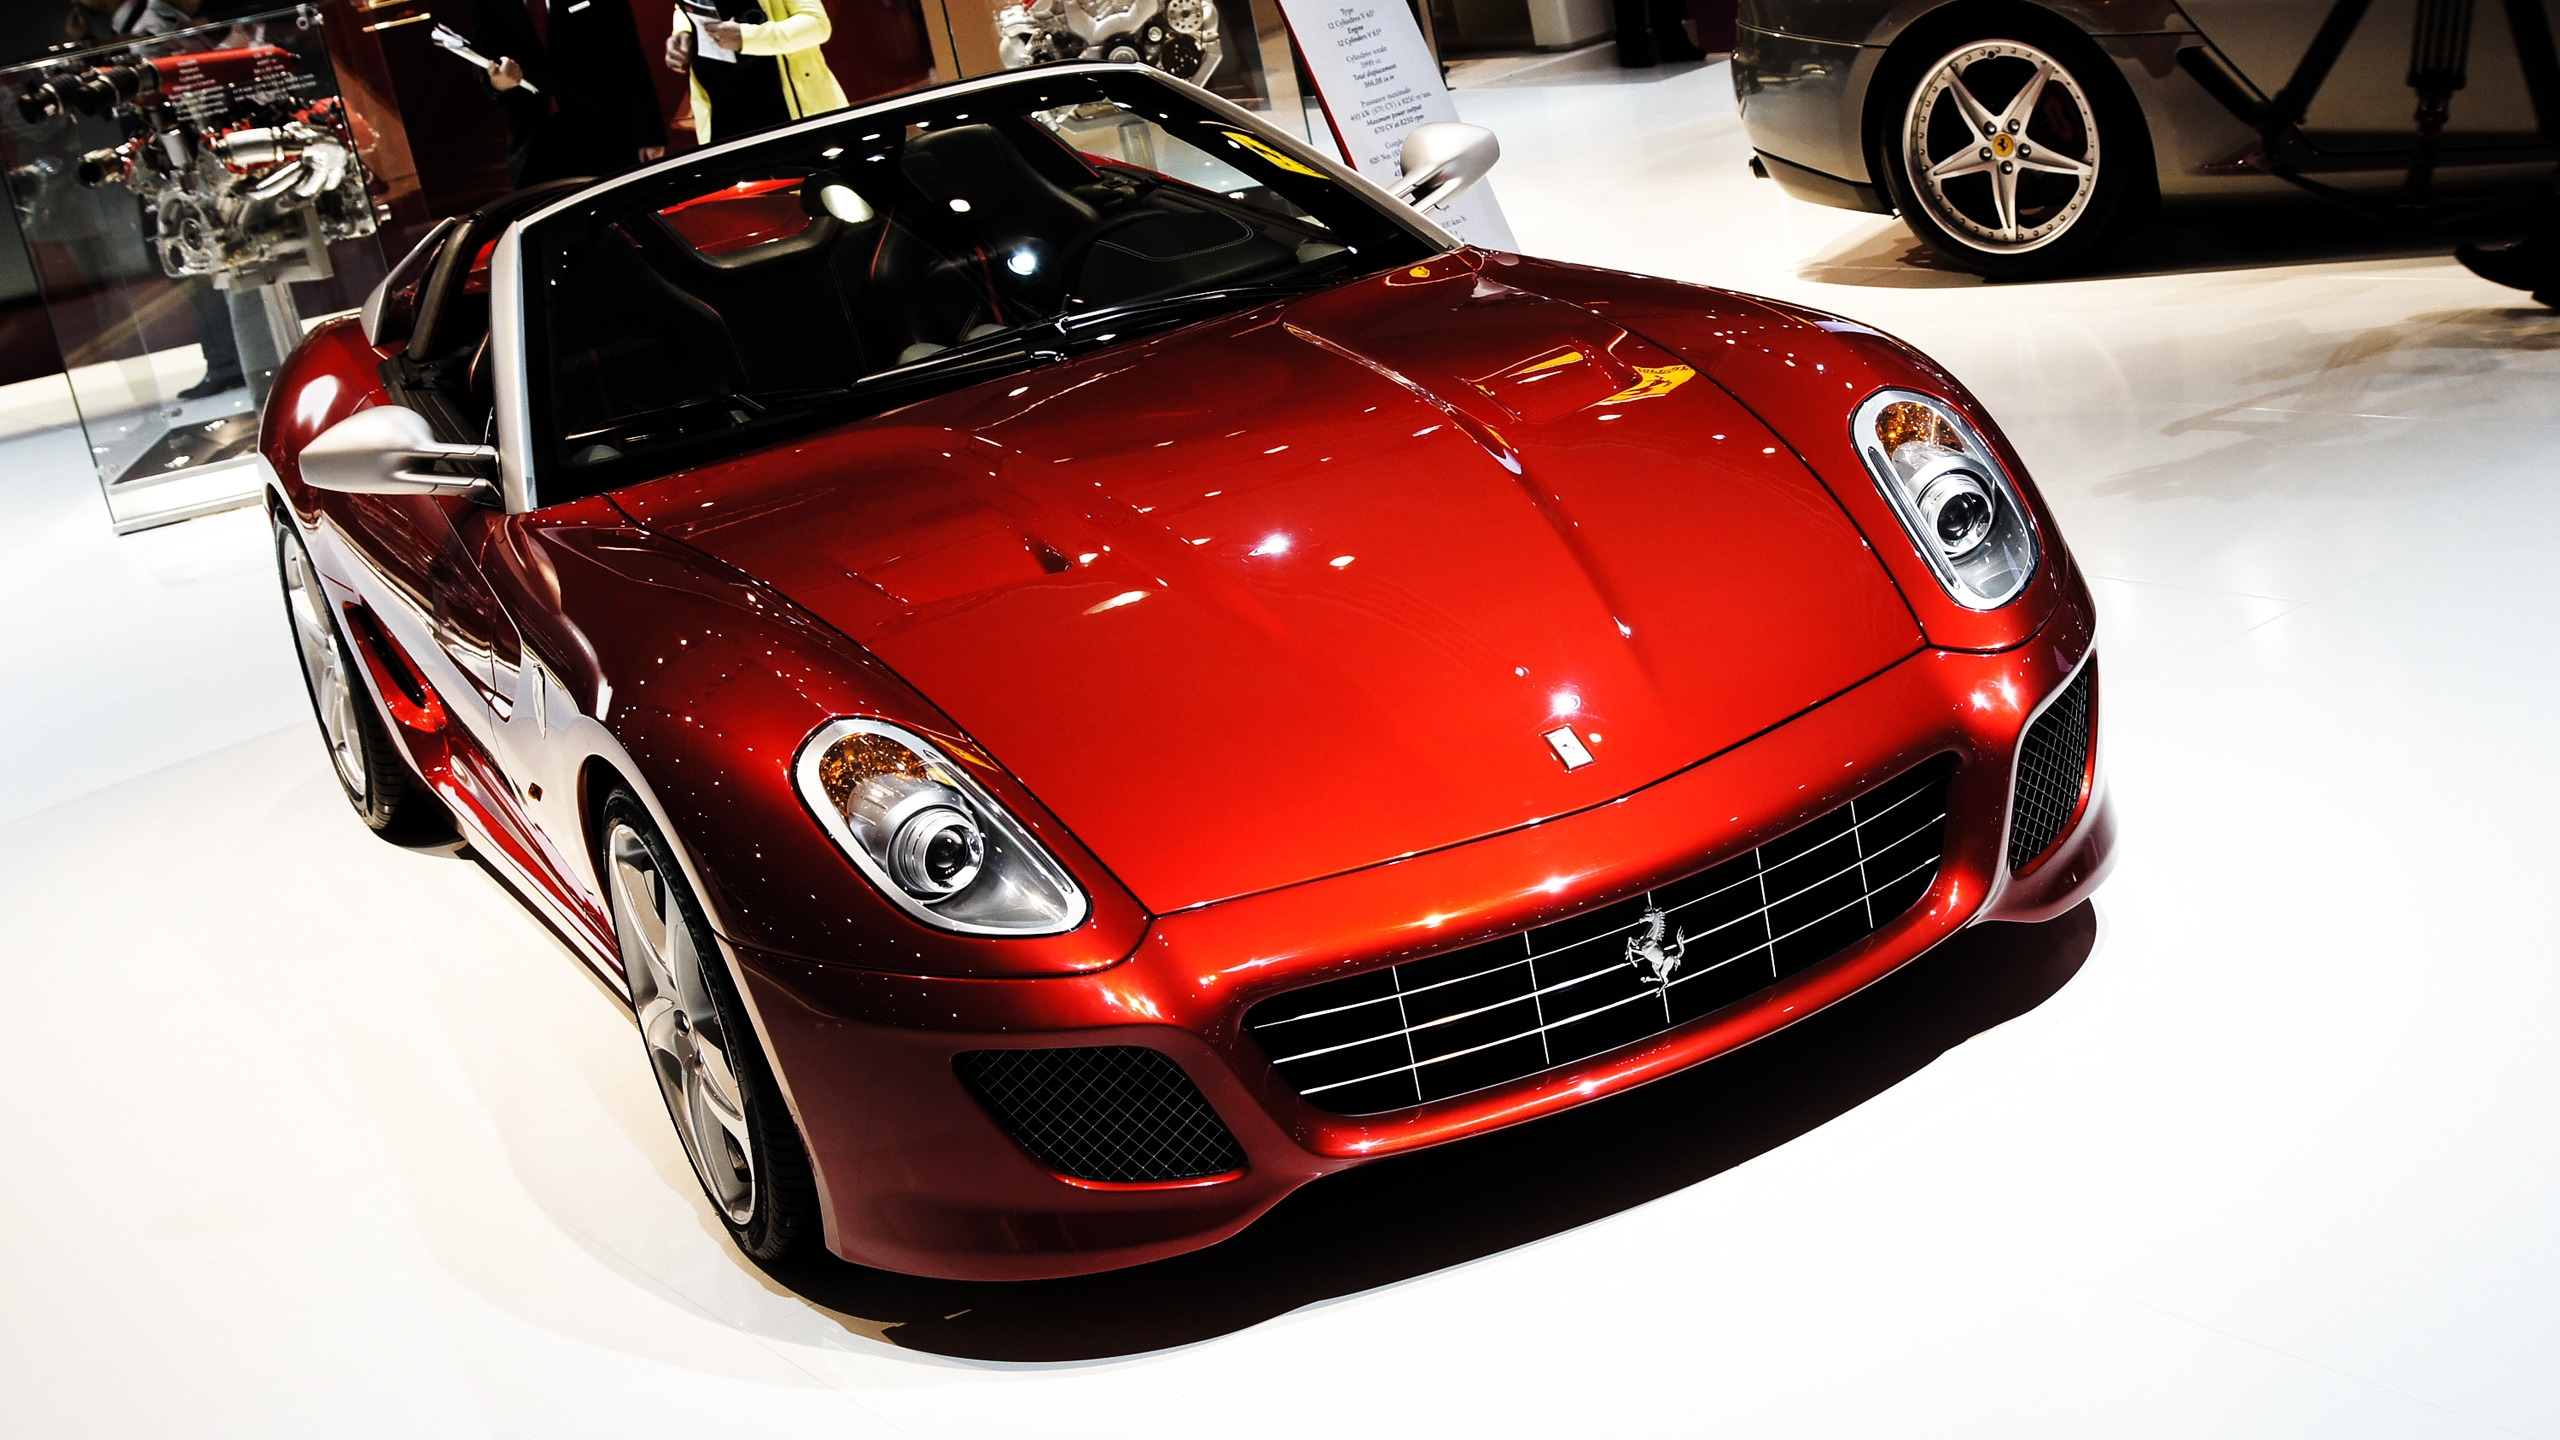 Ferrari SA Aperta Paris for 2560x1440 HDTV resolution